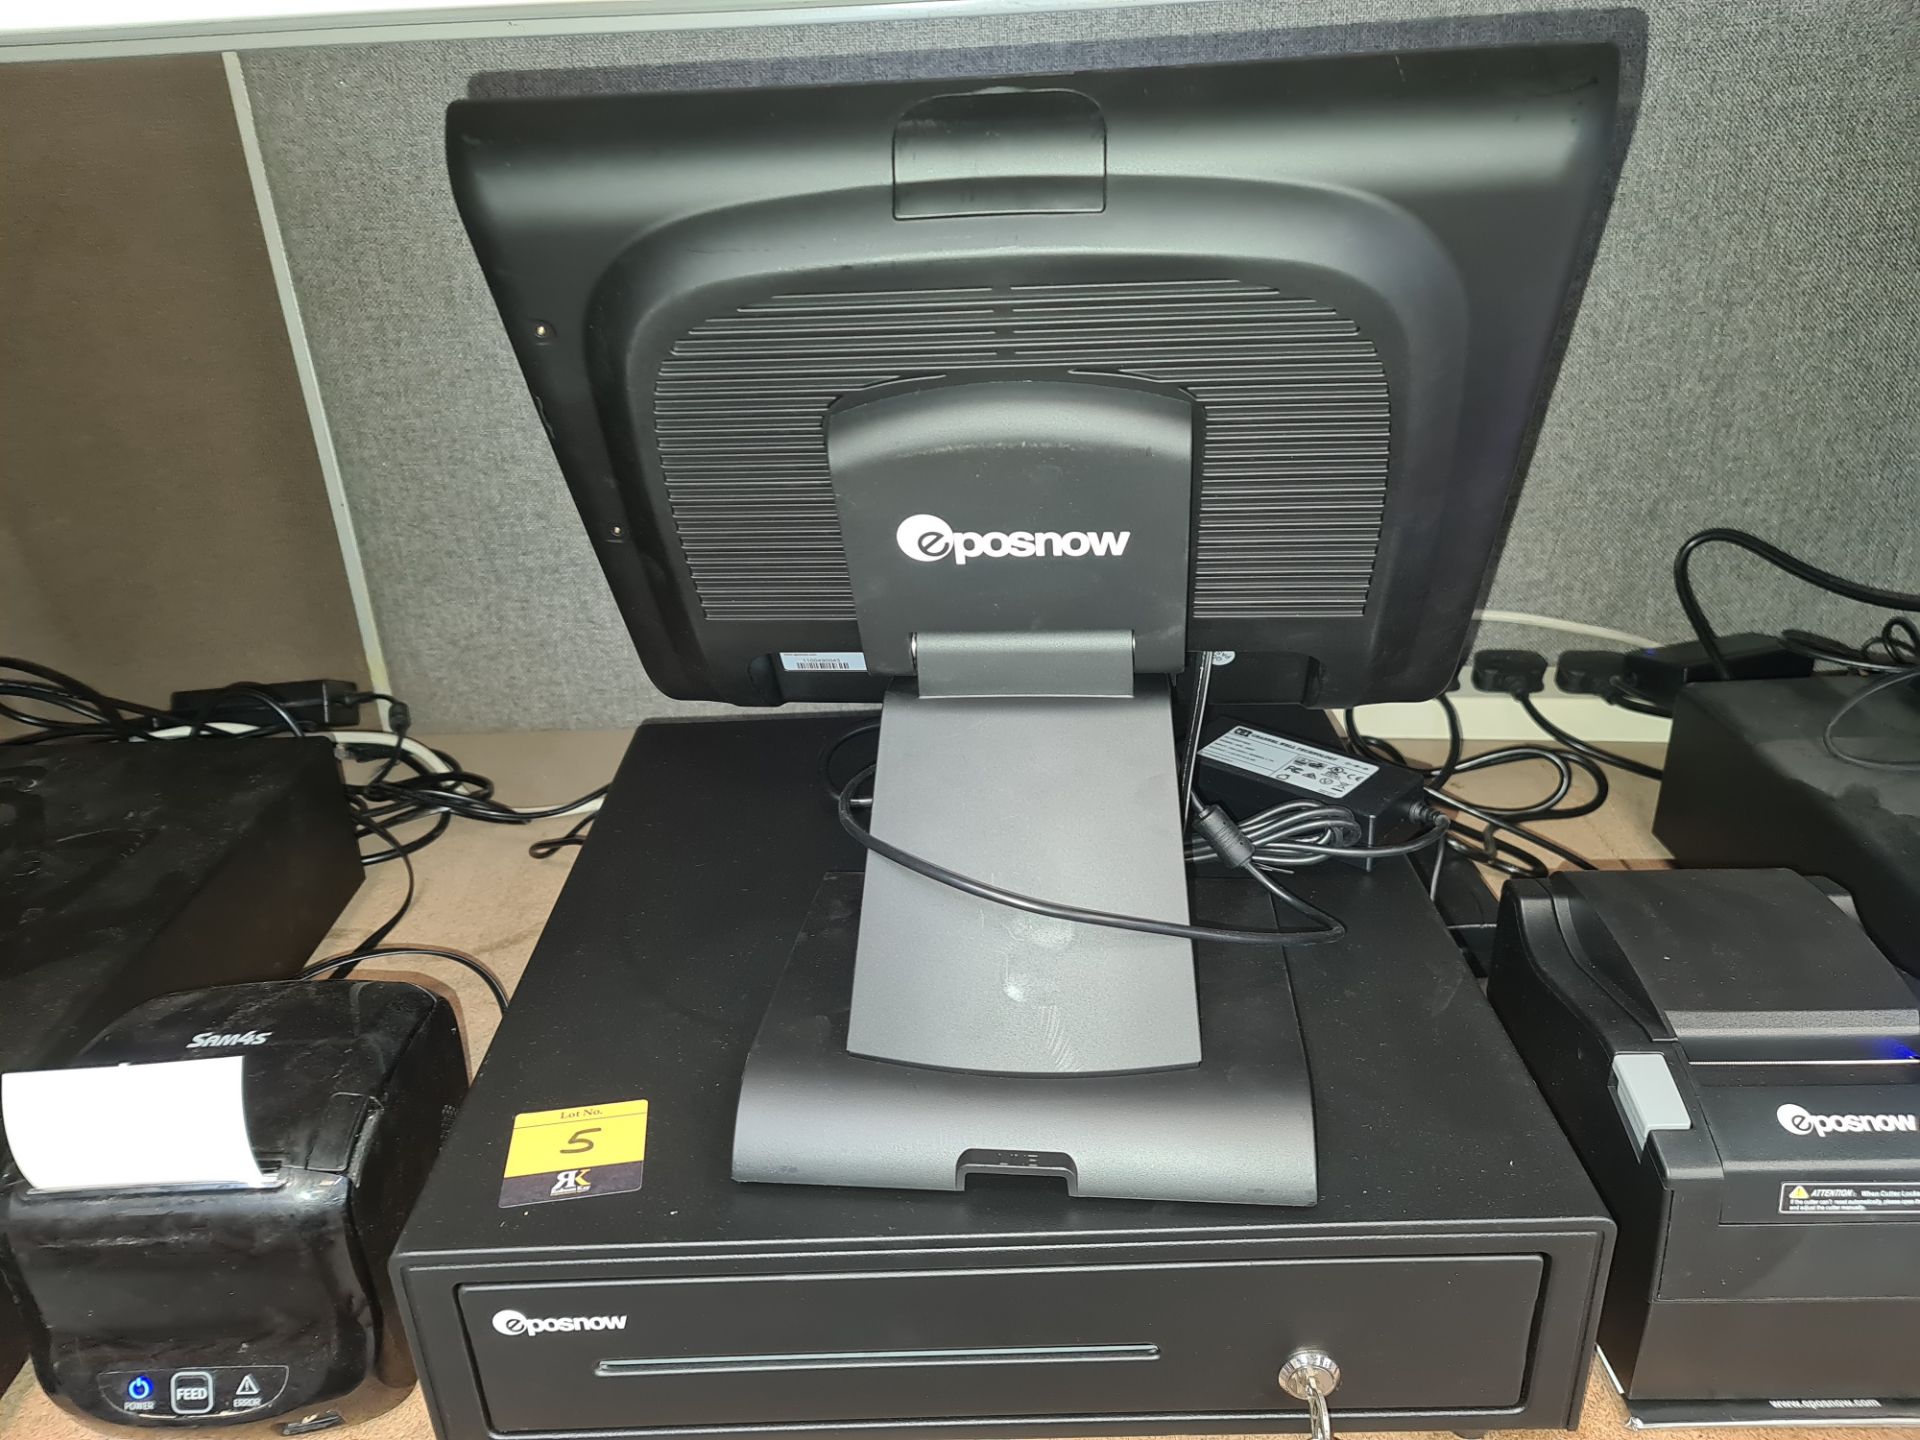 EPOSNOW touchscreen EPOS terminal plus cash drawer & EPOSNOW receipt printer. This lot is being sold - Image 6 of 12